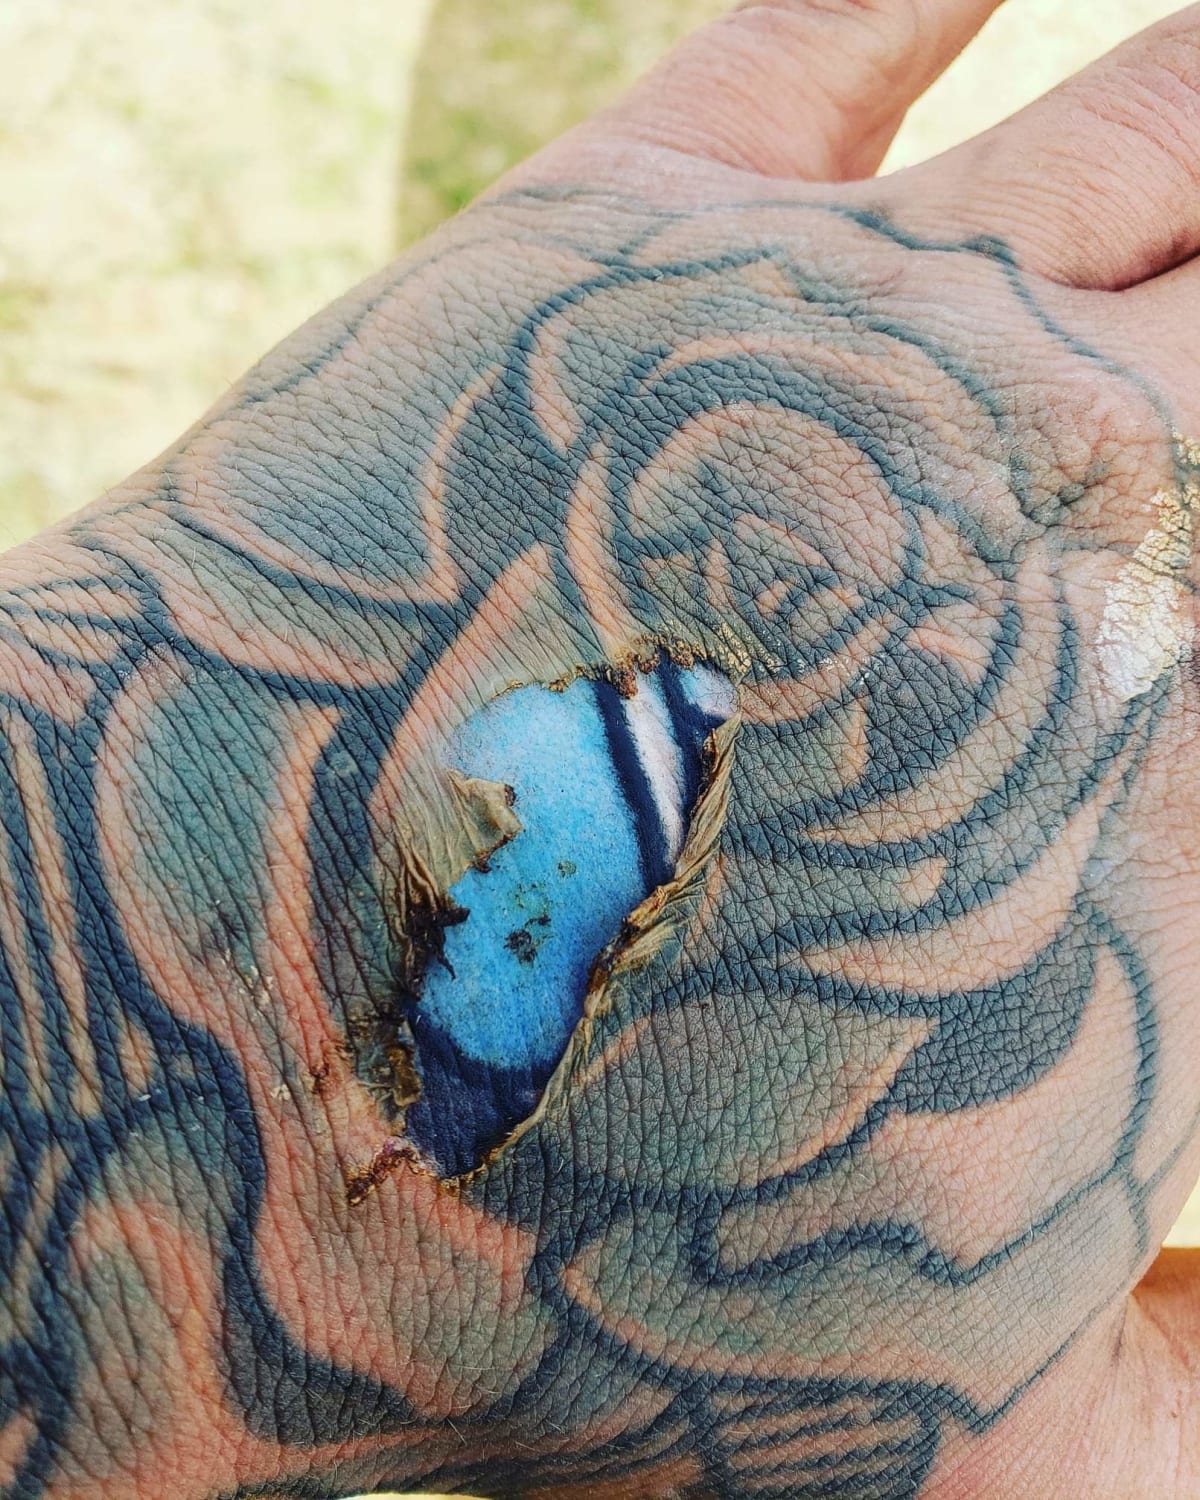 Burn caused beautiful tattoo color reveal.